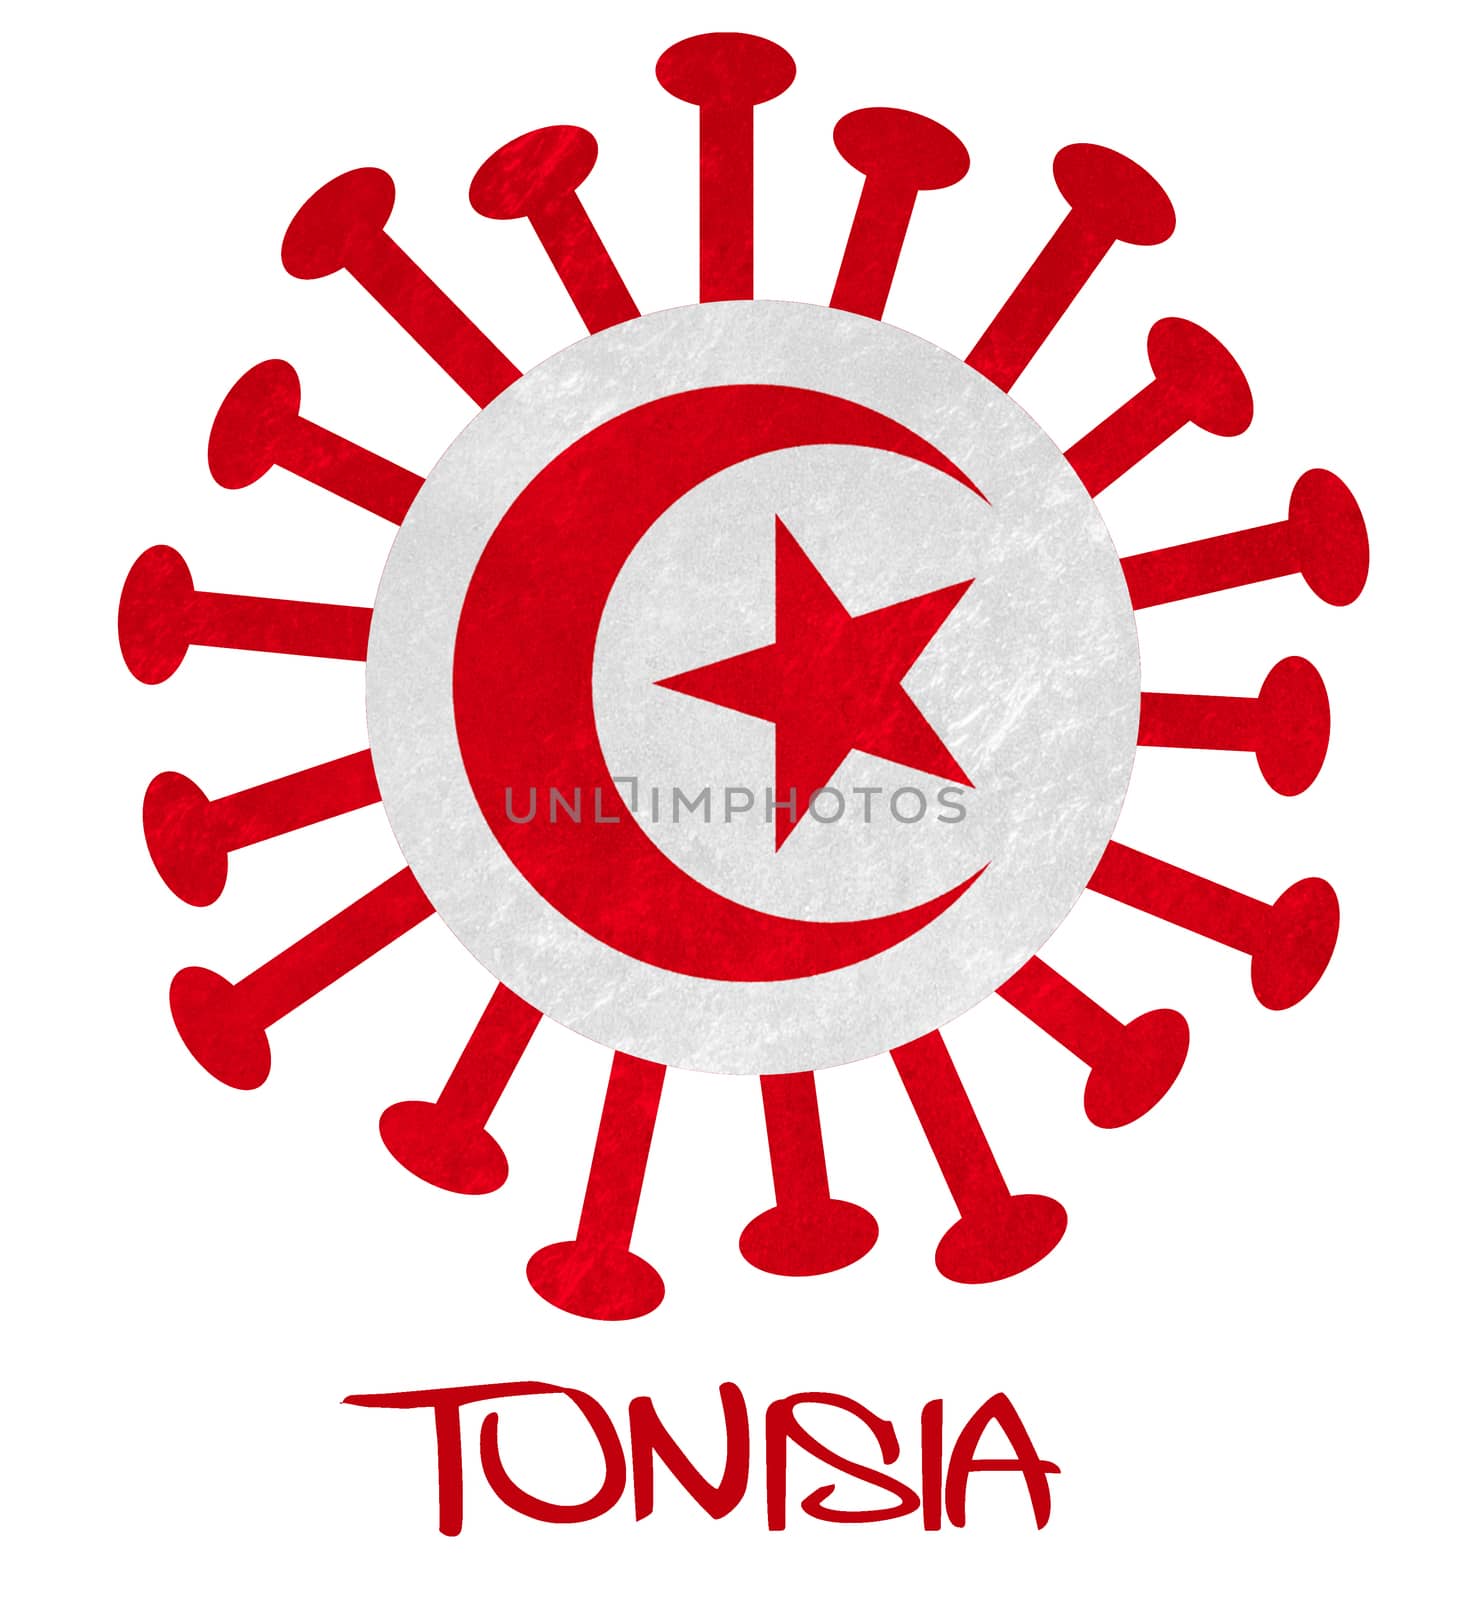 The Tunisian national flag with corona virus or bacteria - Isolated on white